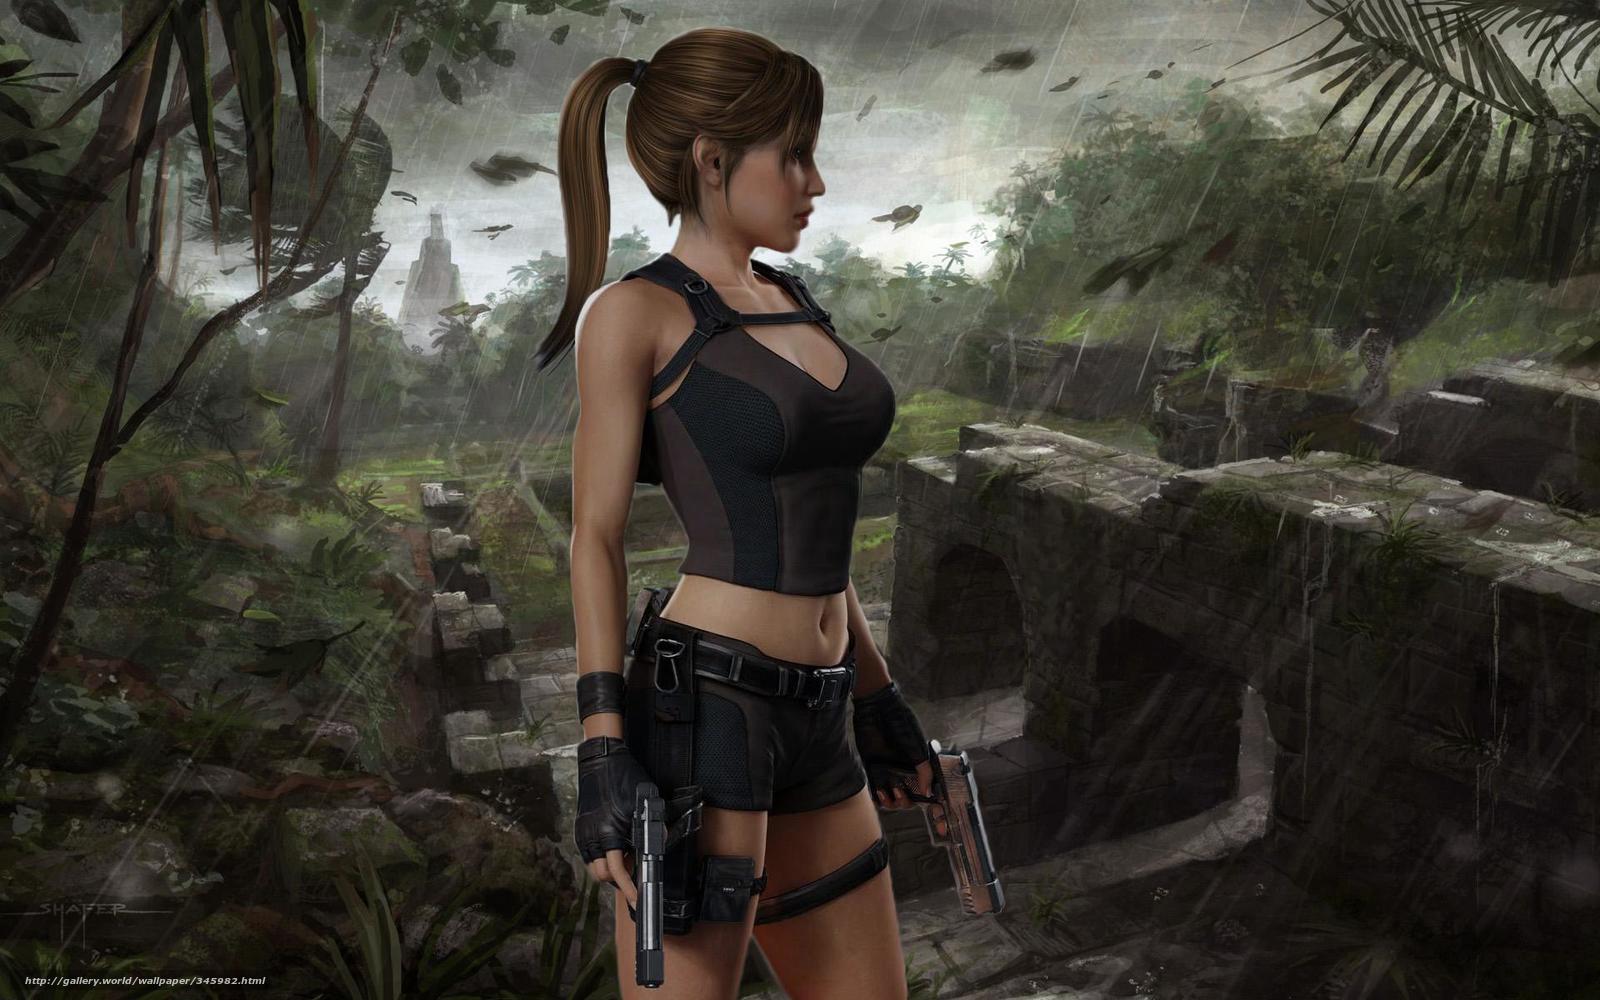 Wallpaper Lara Croft Tomb Raider Girl Desktop